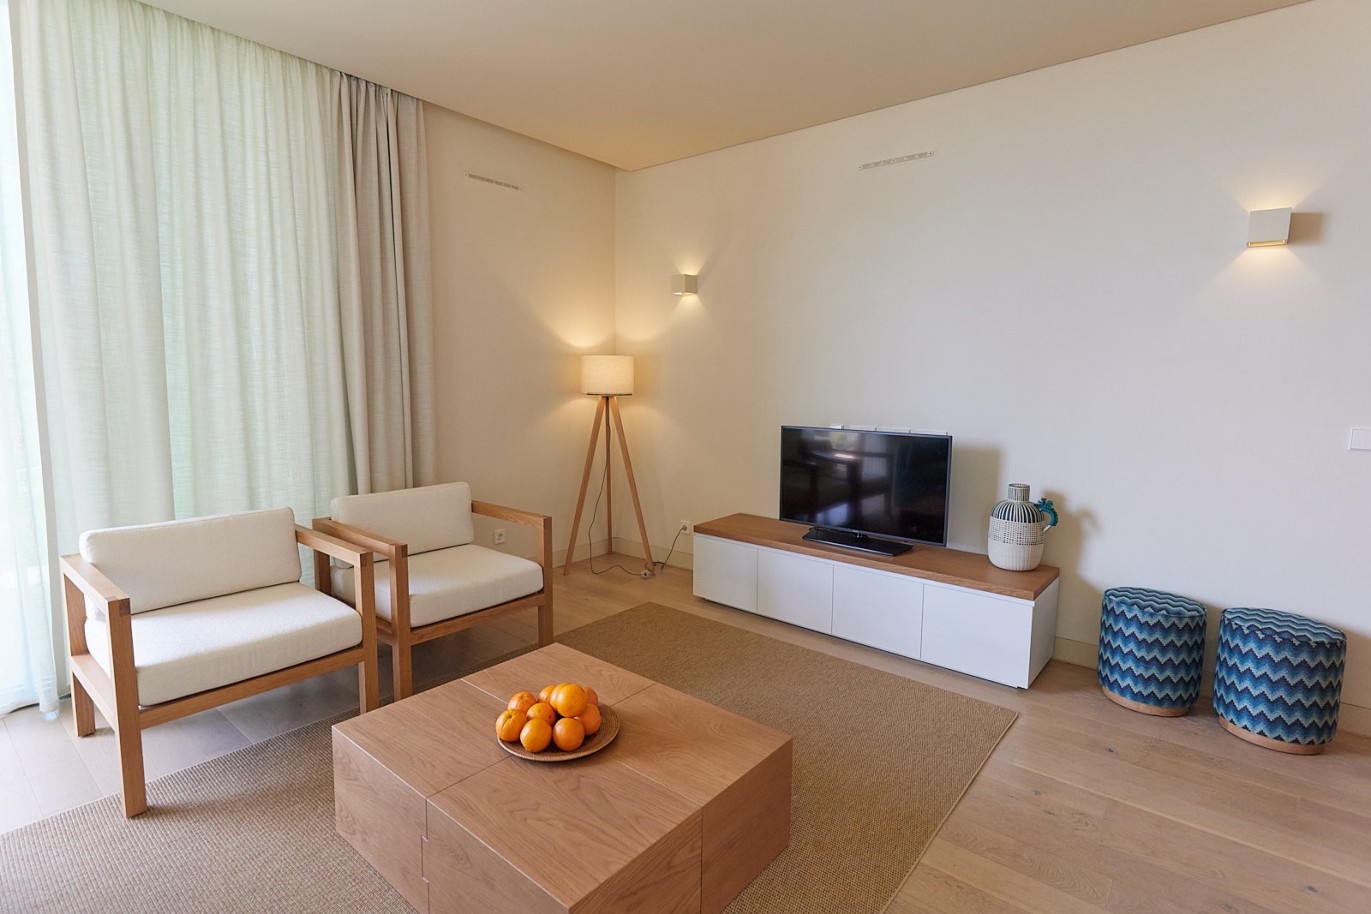 2 bedroom apartment in resort, for sale in Porches, Algarve_229100